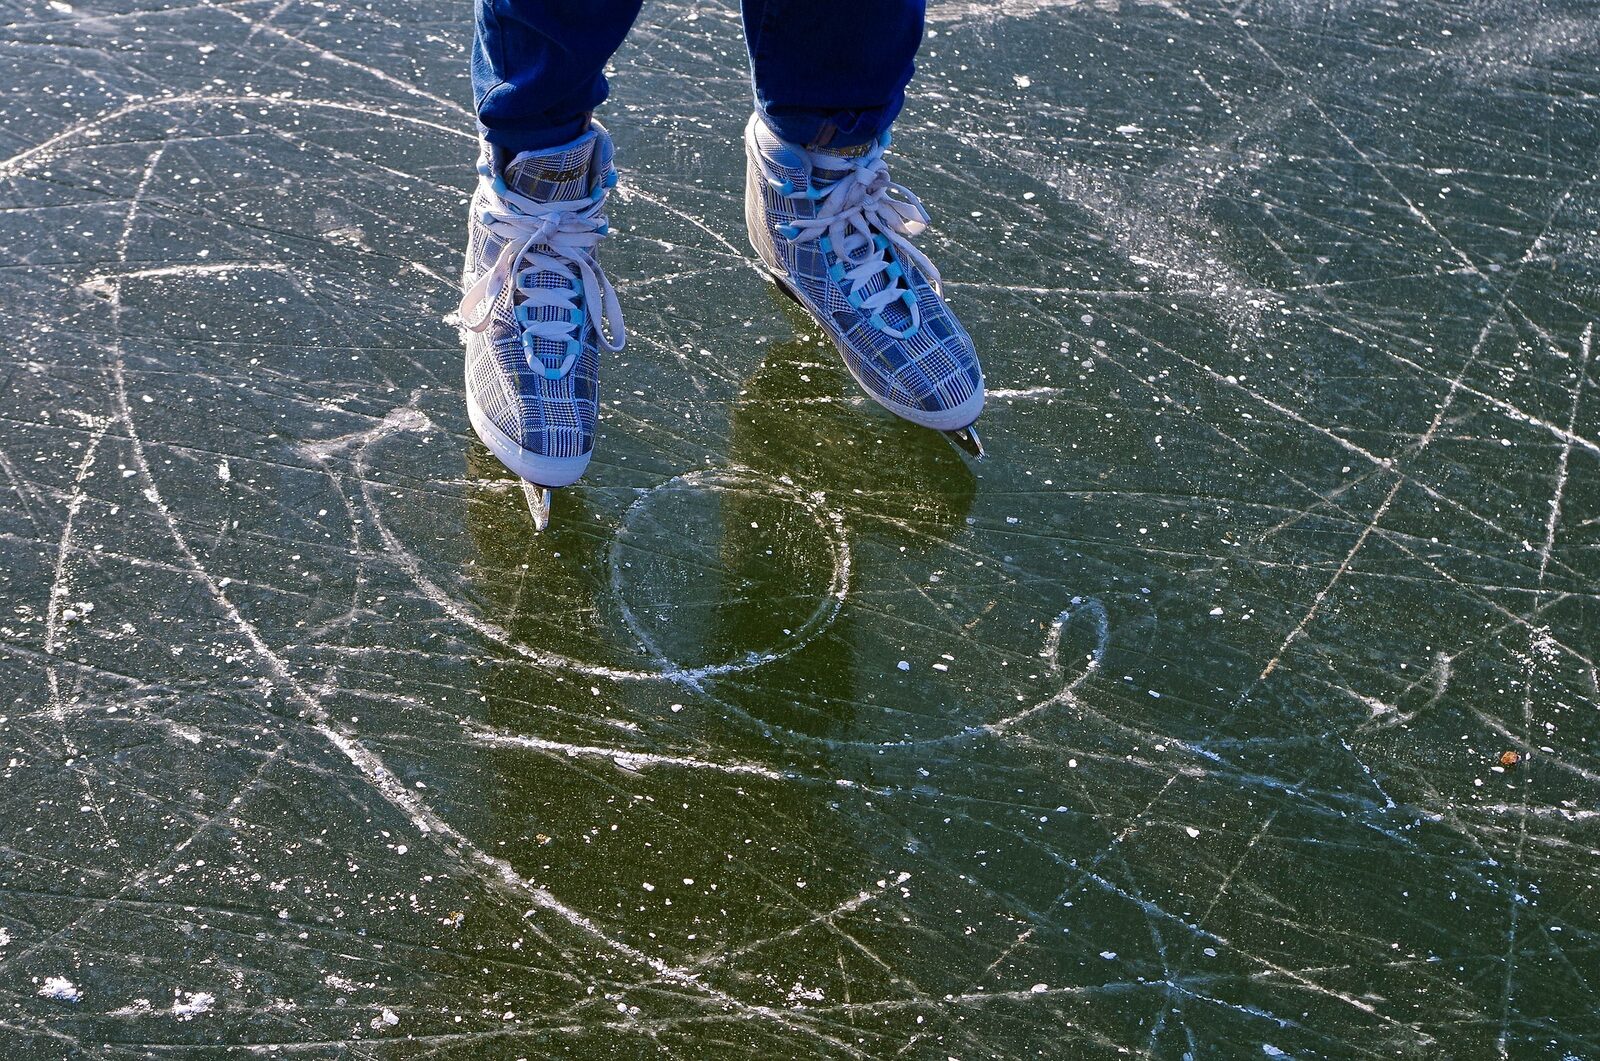 Ice skating museum - Hindeloopen